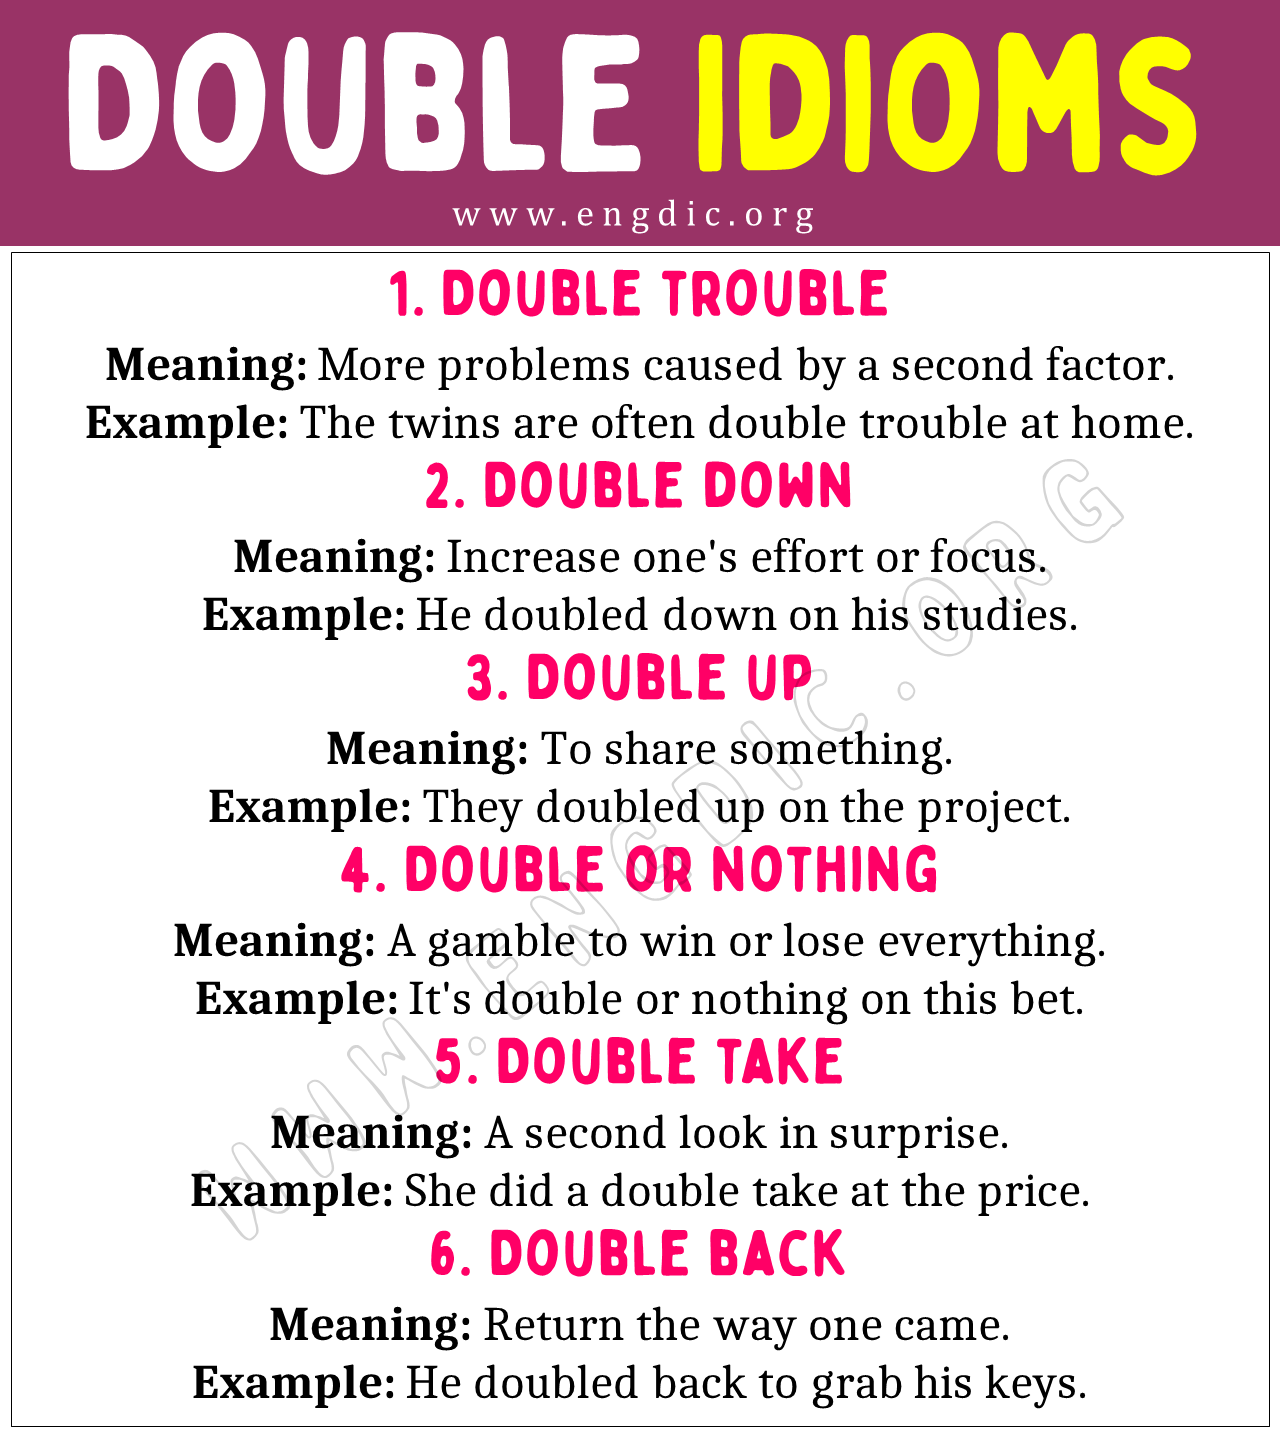 Double Idioms